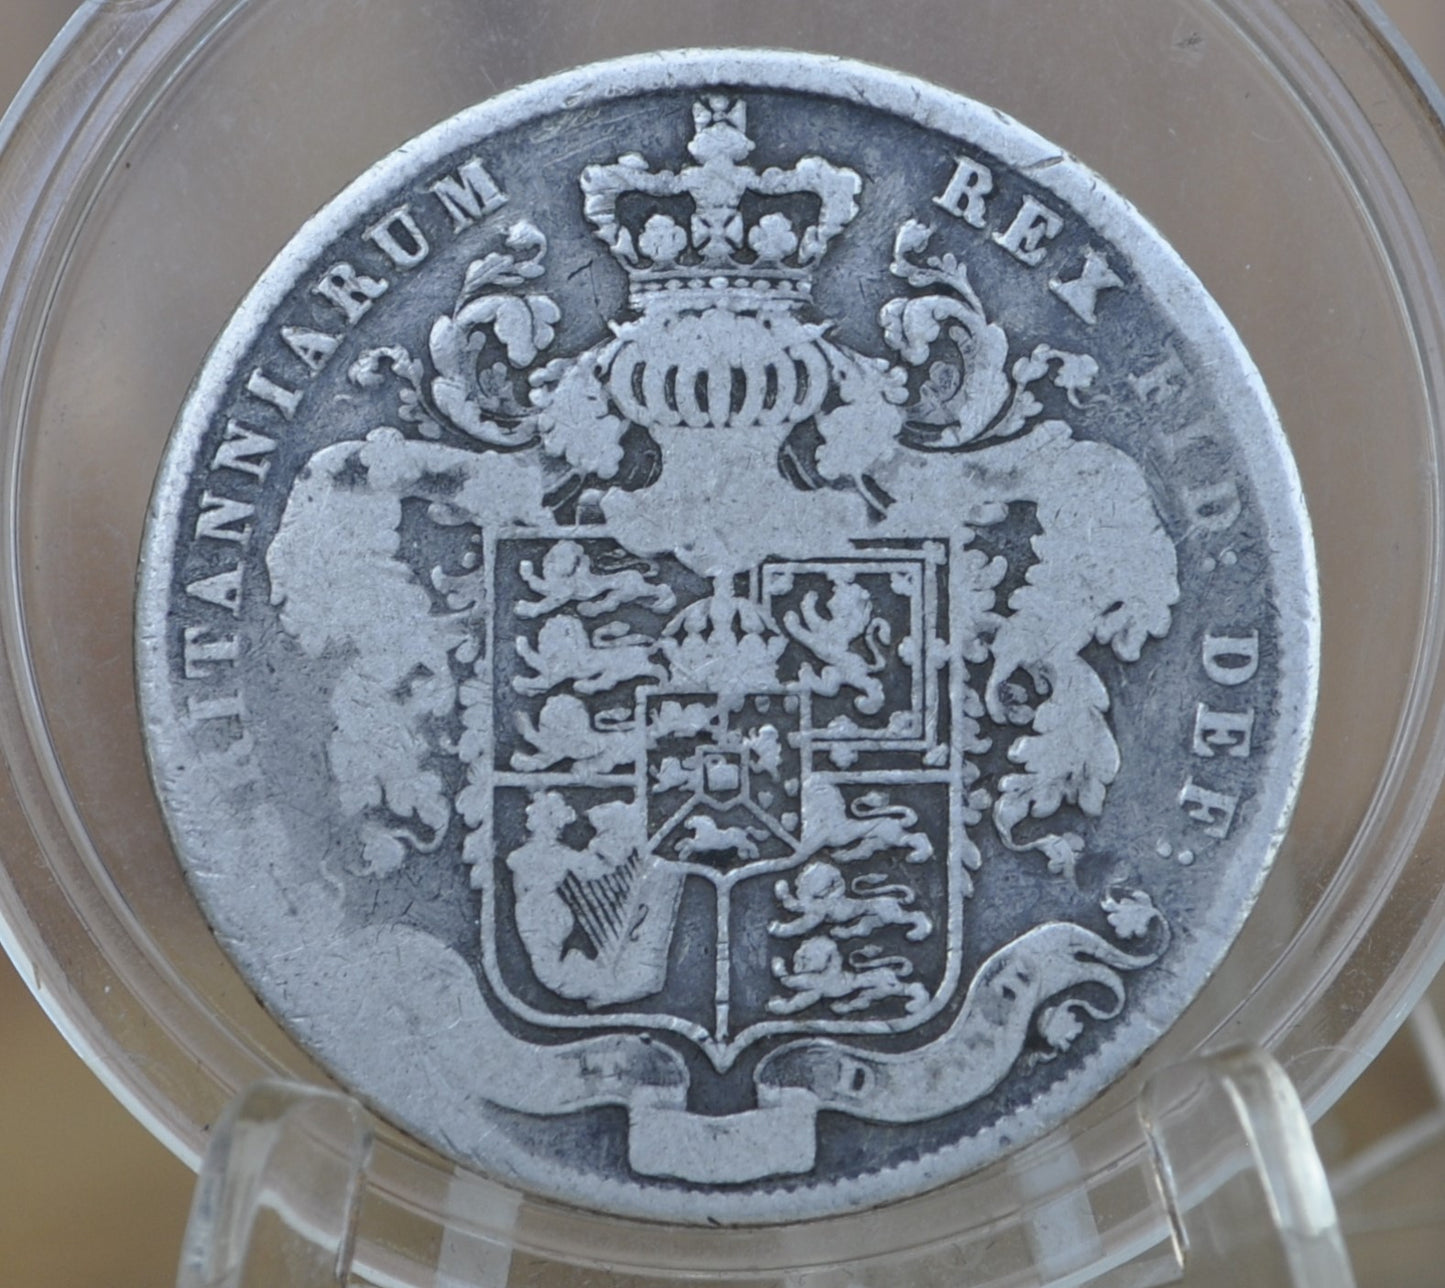 1825 Great Britain Half Crown - VG (Very Good) Detail - Silver 1/2 Crown 1825 United Kingdom HalfCrown Silver